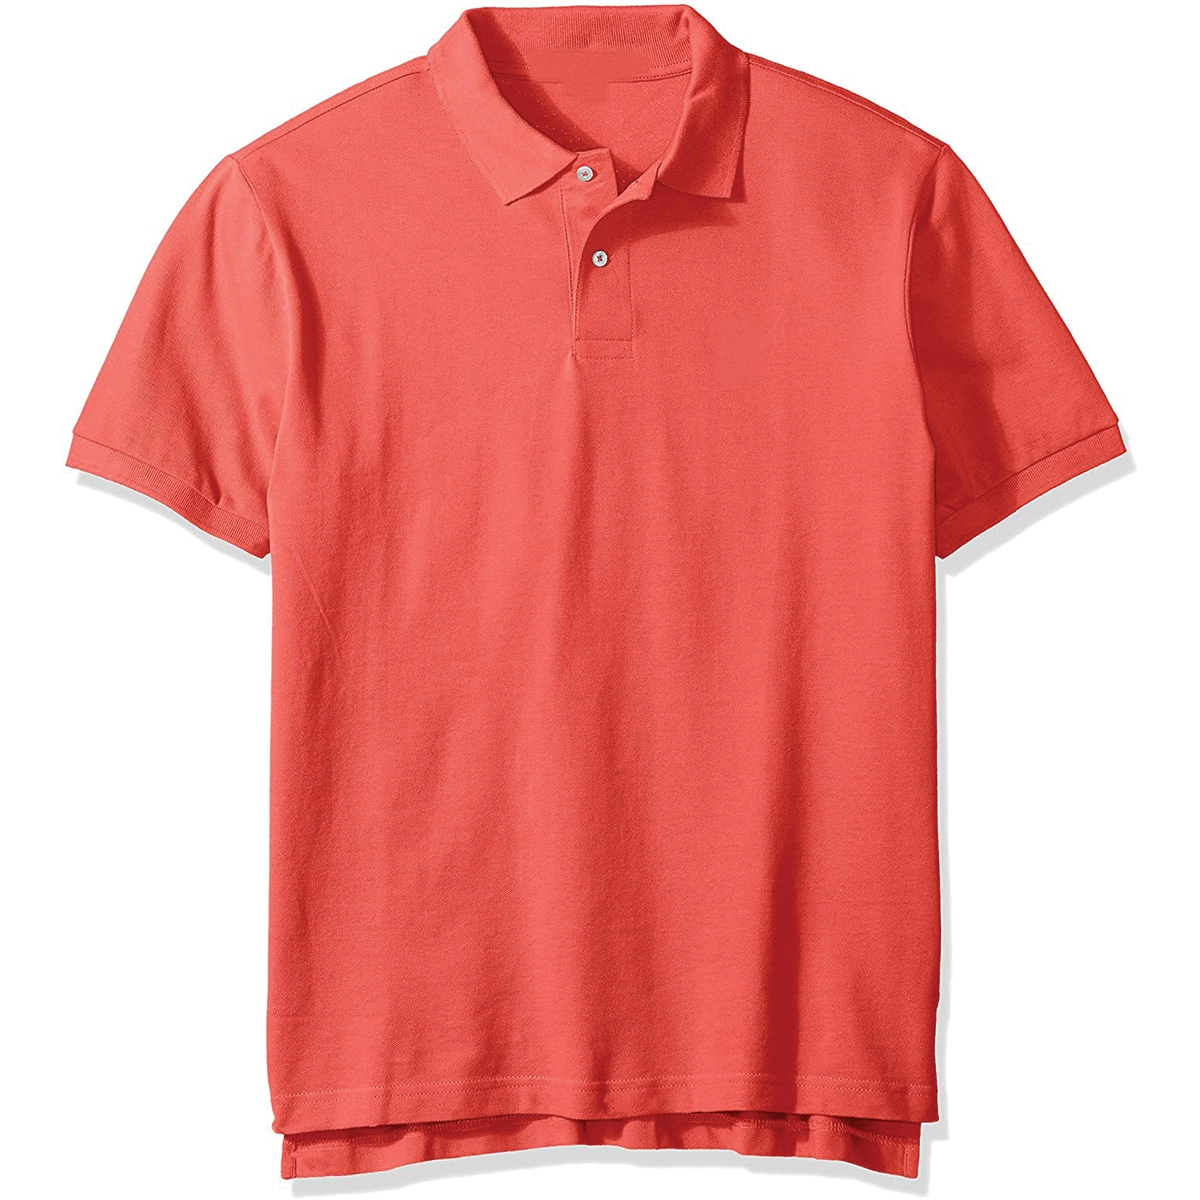 Wholesale OEM unisex Polo Shirt Blank sports Custom printing logo Design 100% cotton pique plain mens golf polo t shirts for Men